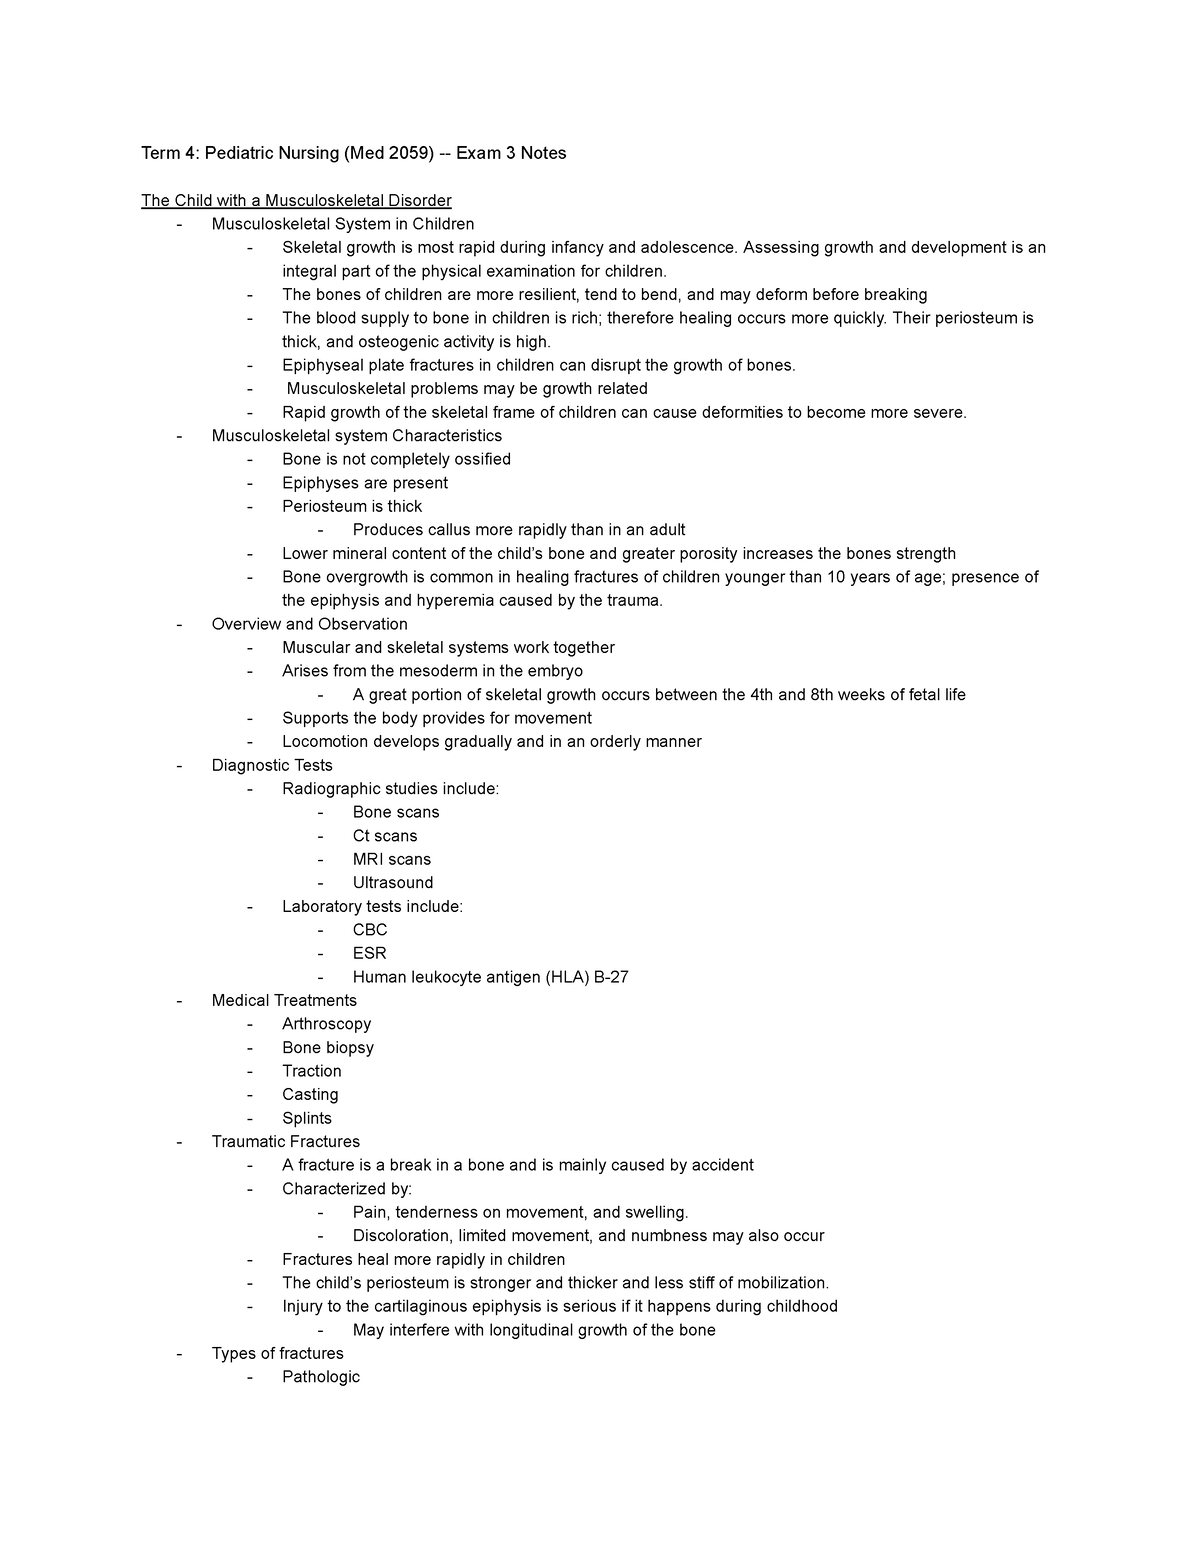 Term 4 Pediatric Nursing Med 2059 Exam 3 notes Google Docs - Term 4 ...